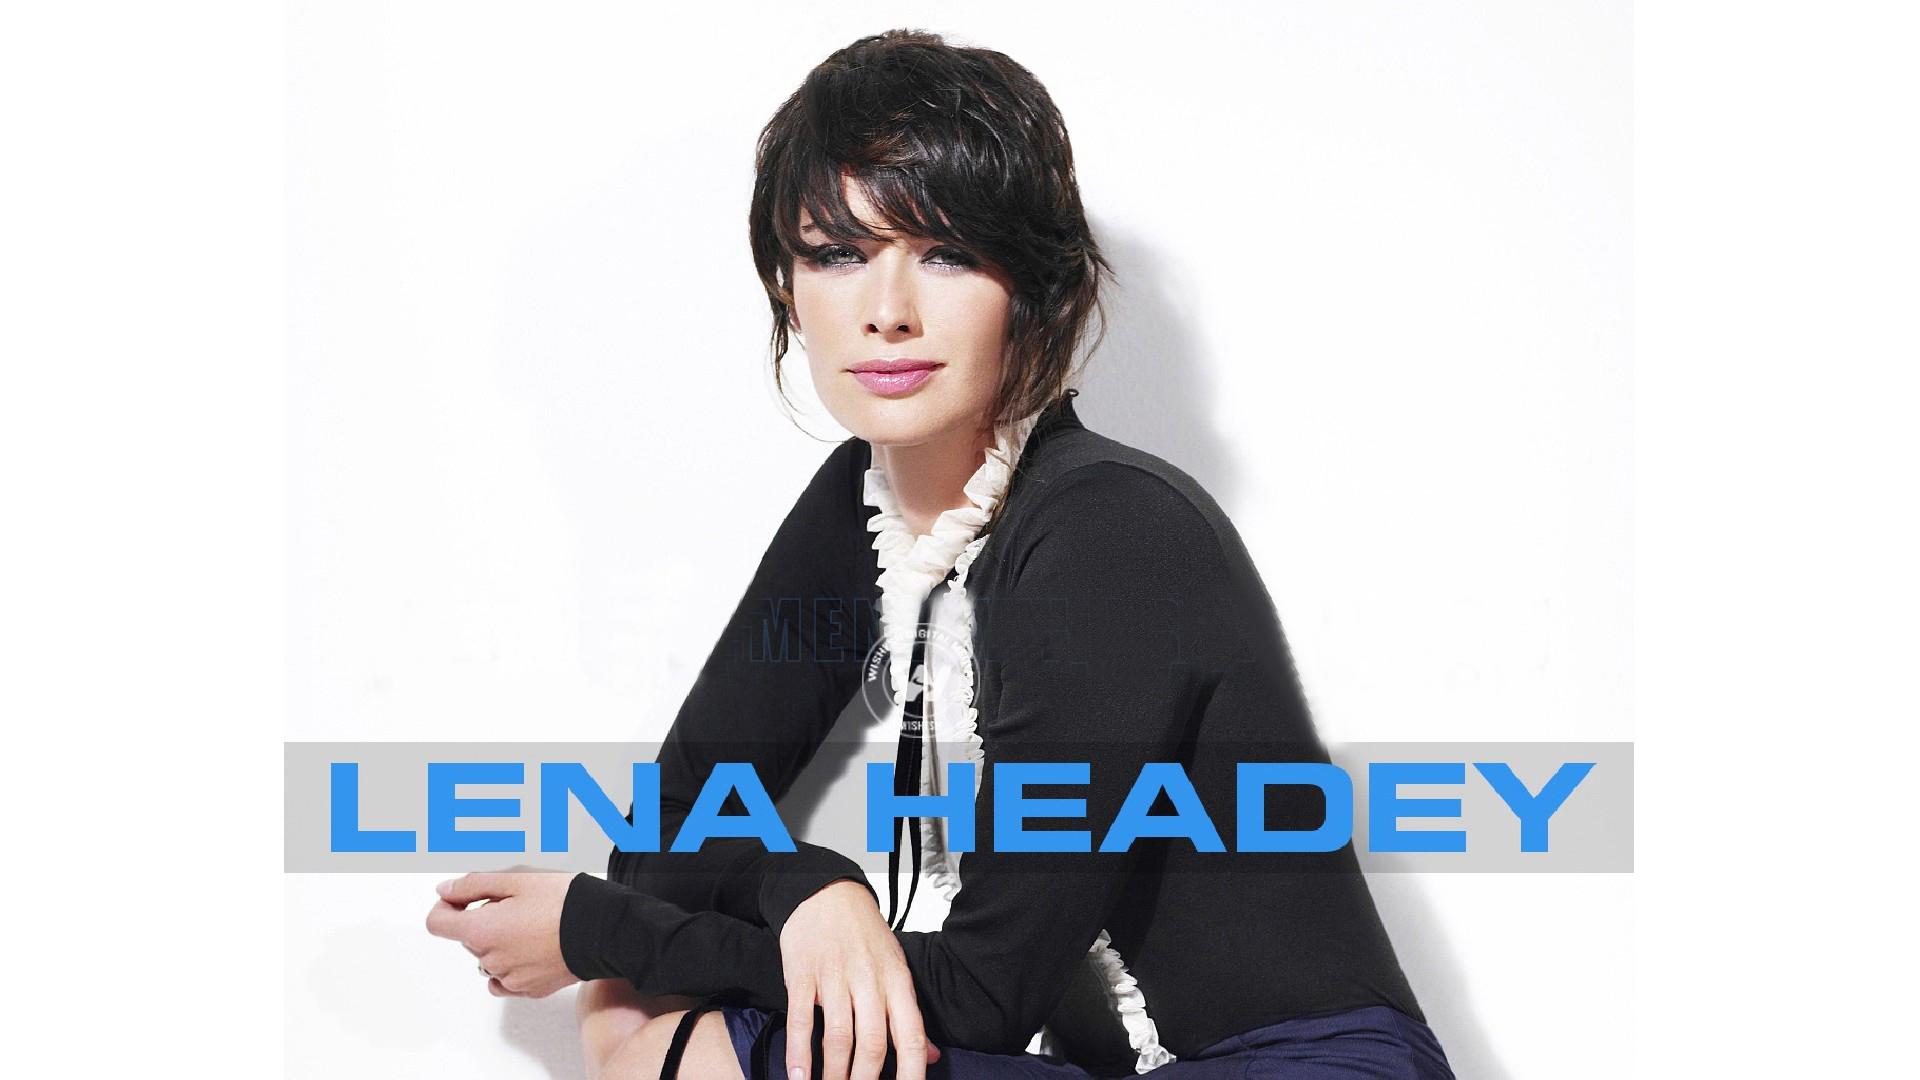 Lena Headey Latest Hot Wallpapers | Lena Headey Latest Hot Wallpapers | Wallpaper 5of 10 | Latest Gorgeous Images of Actress Lena Headey